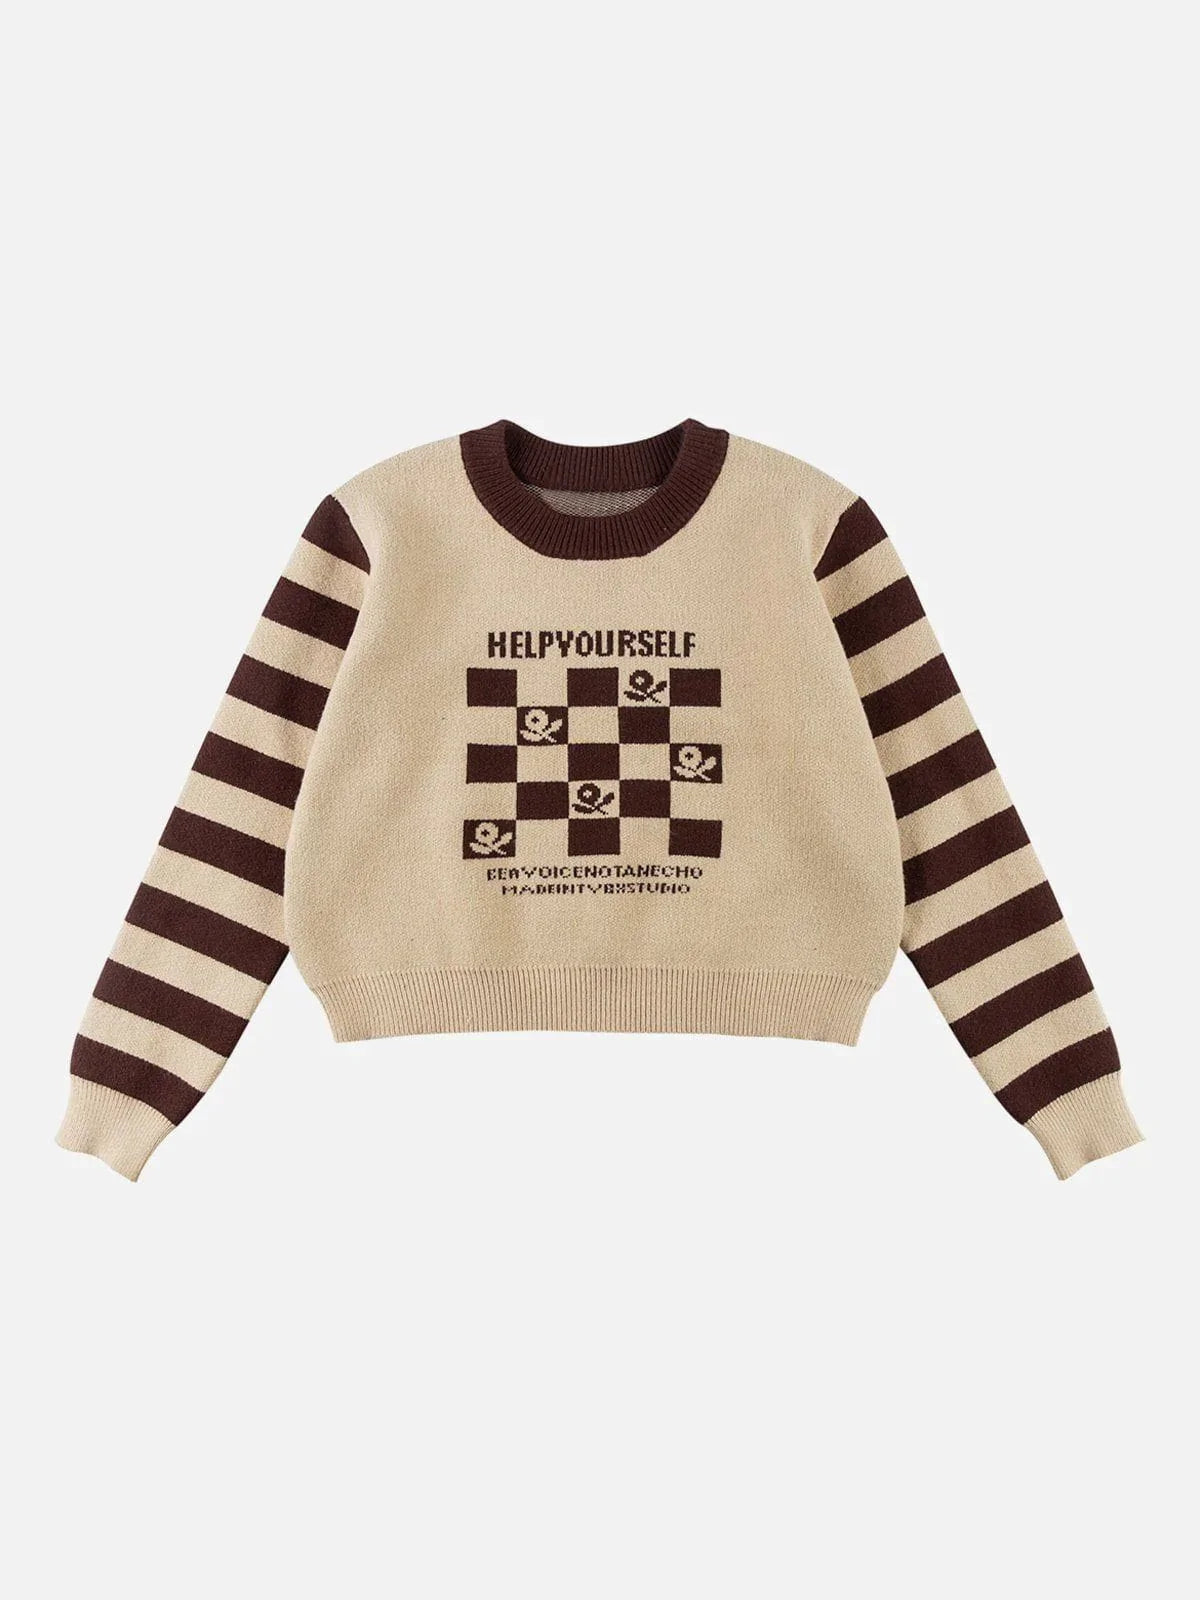 Majesda® - Vintage PLAID Print Sweater outfit ideas streetwear fashion